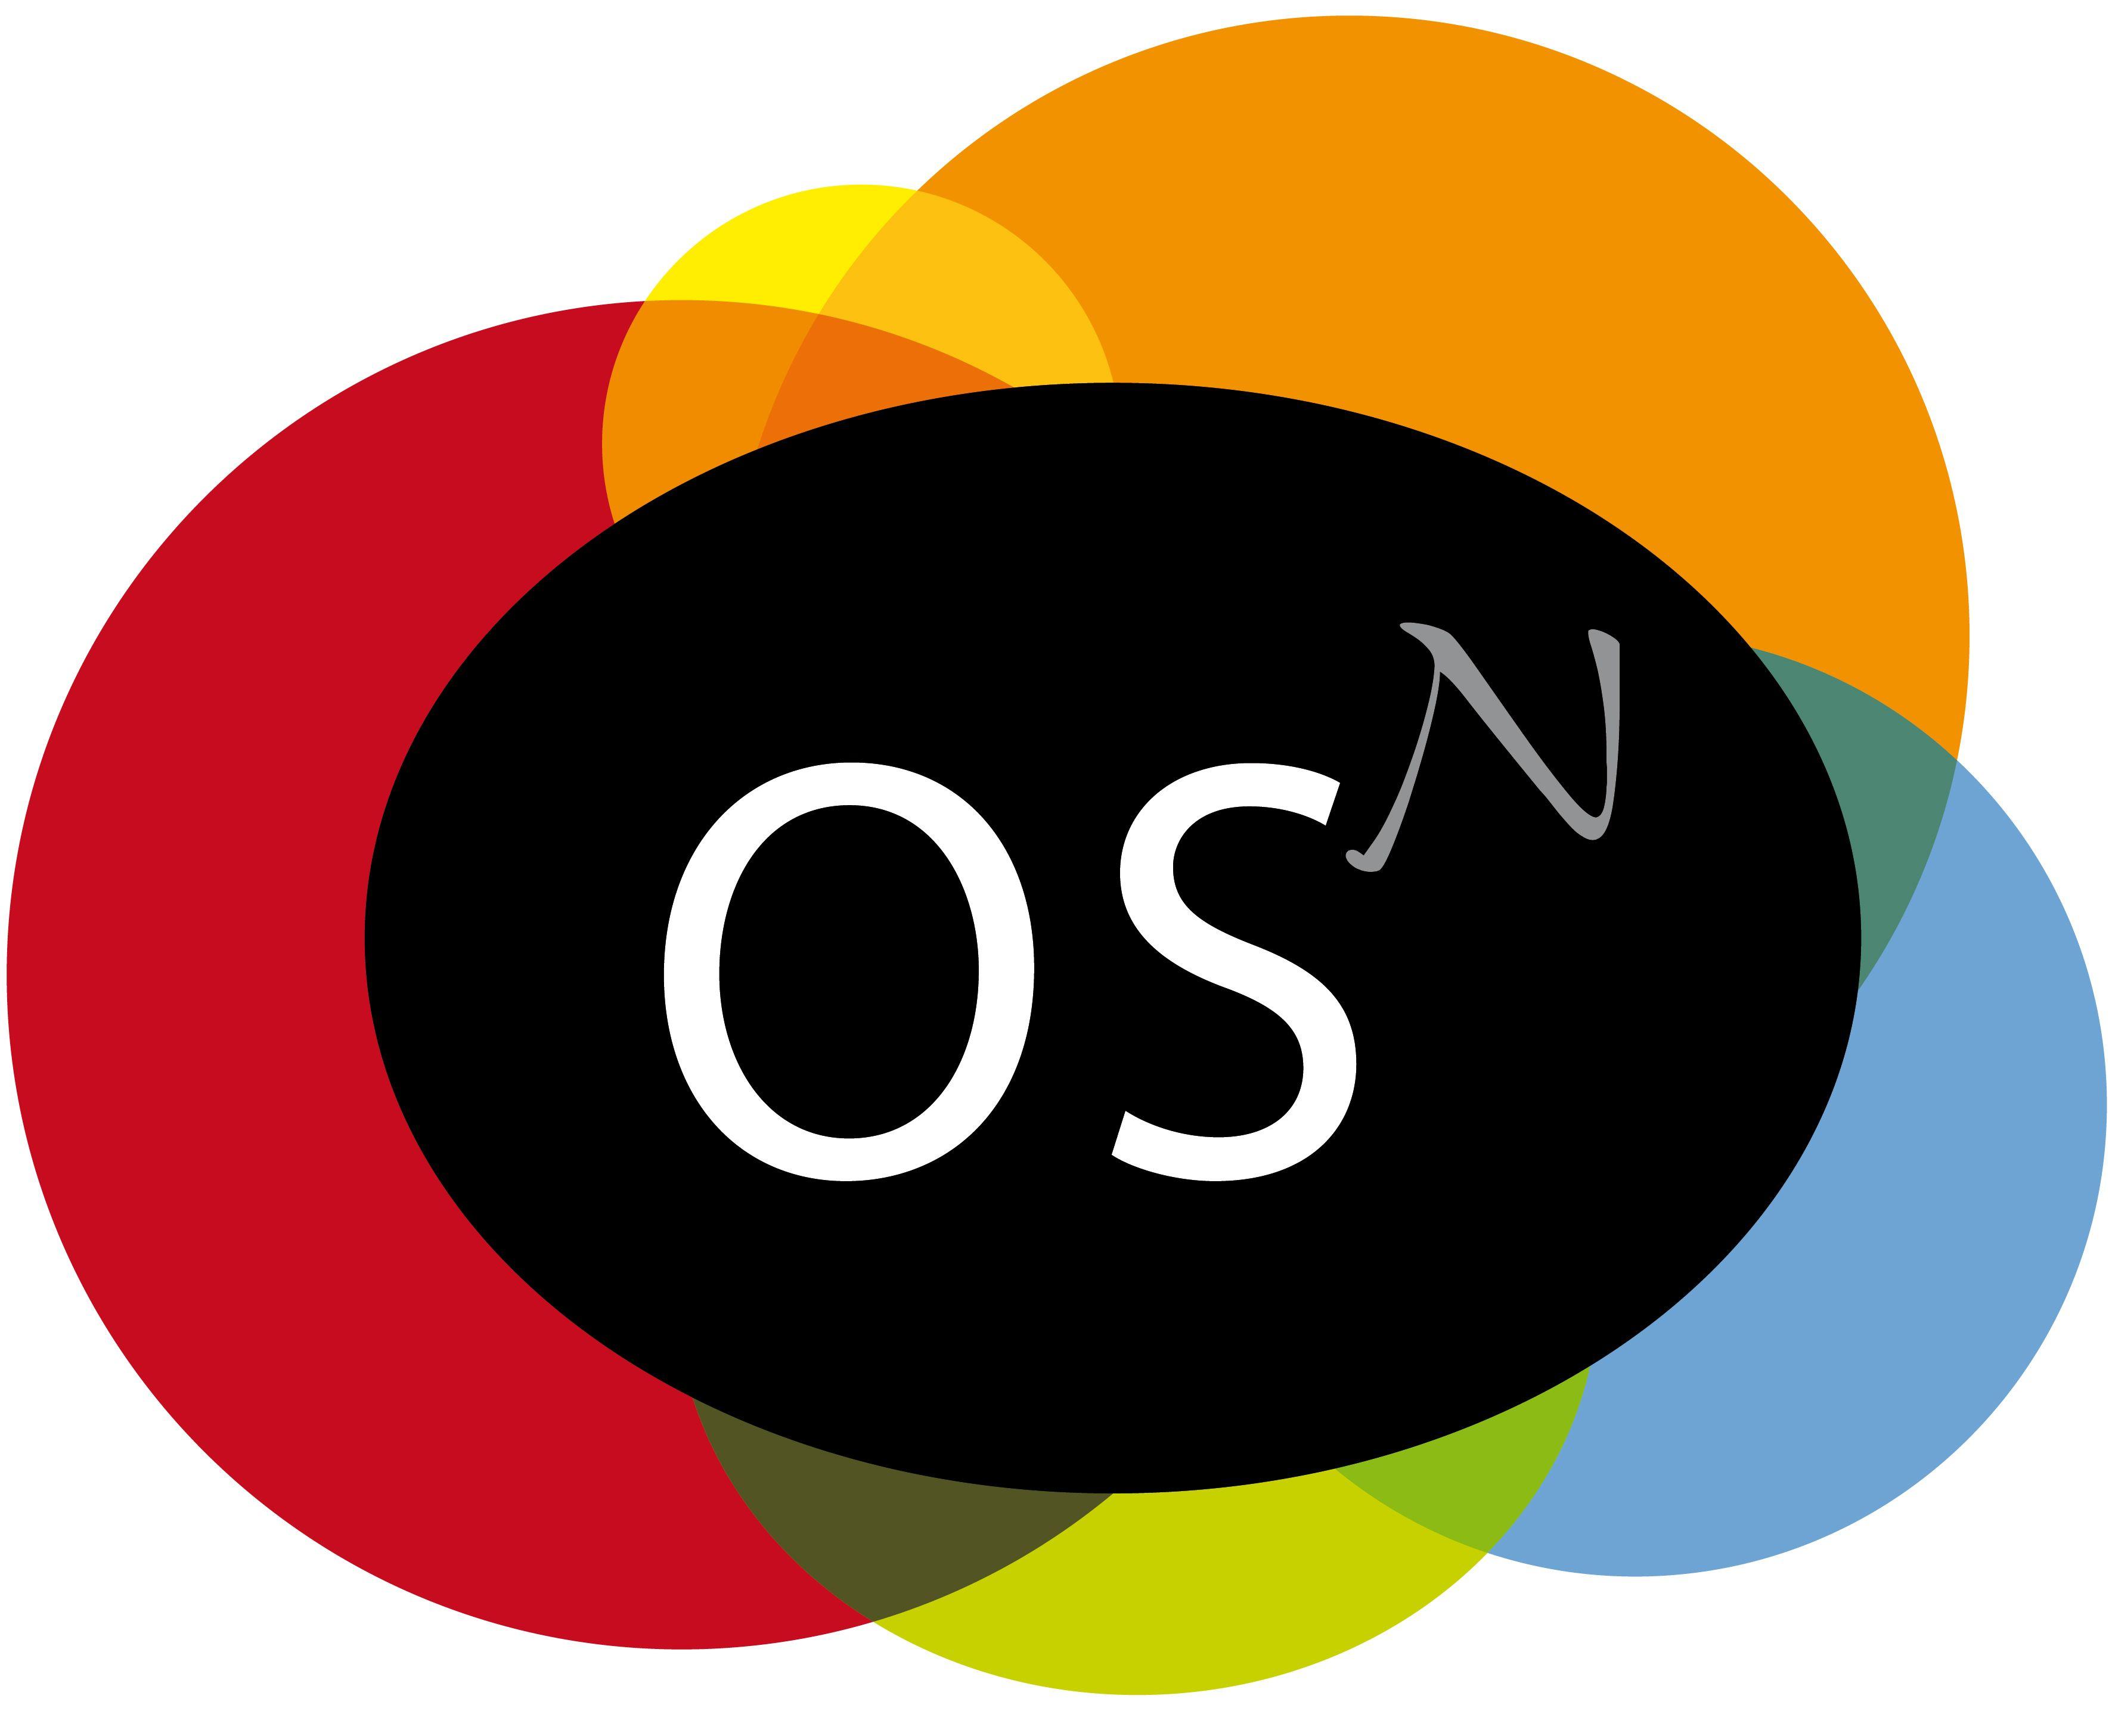 OS Logo - File:Logo Novius OS.jpg - Wikimedia Commons